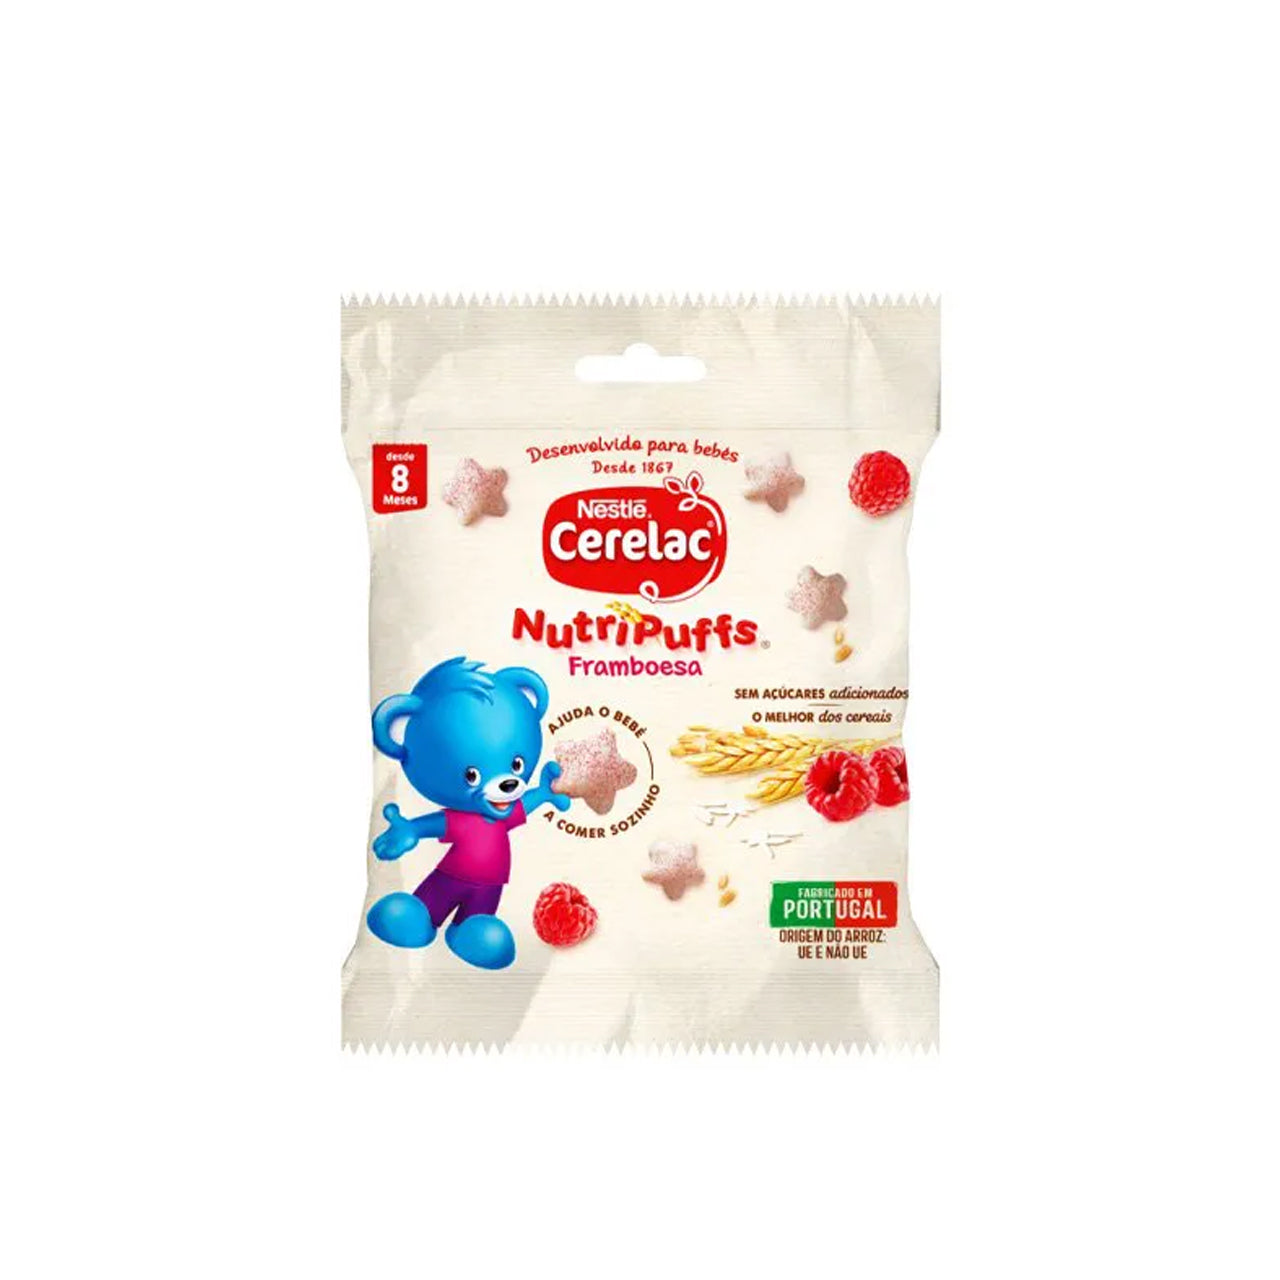 Nestlé Cerelac Nutripuffs Framboesa 7 gr